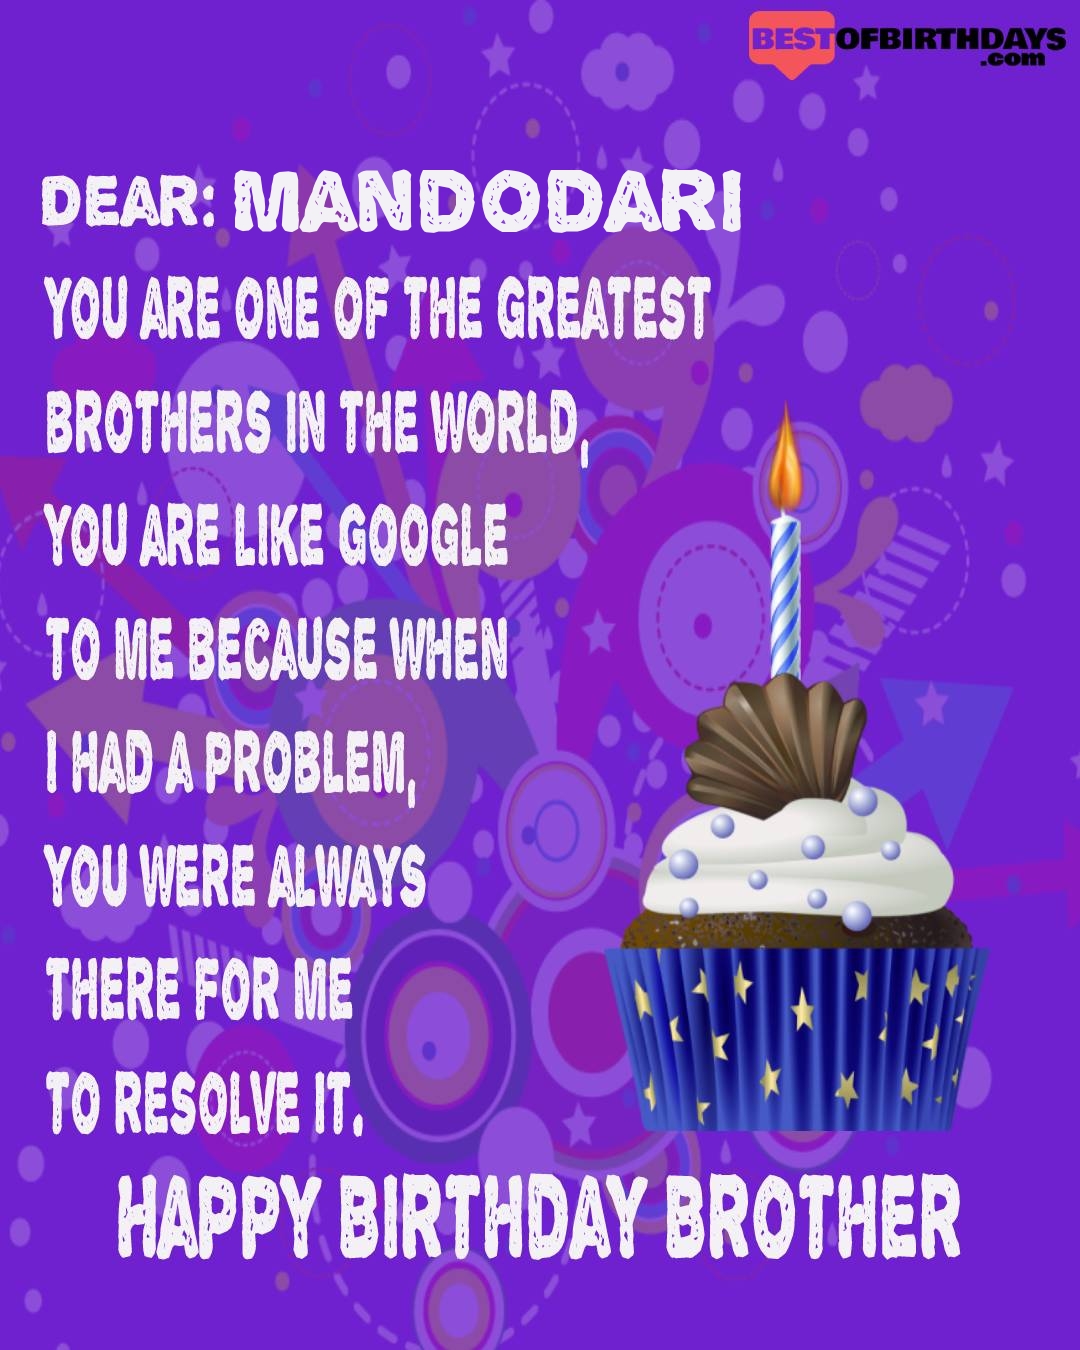 Happy birthday mandodari bhai brother bro